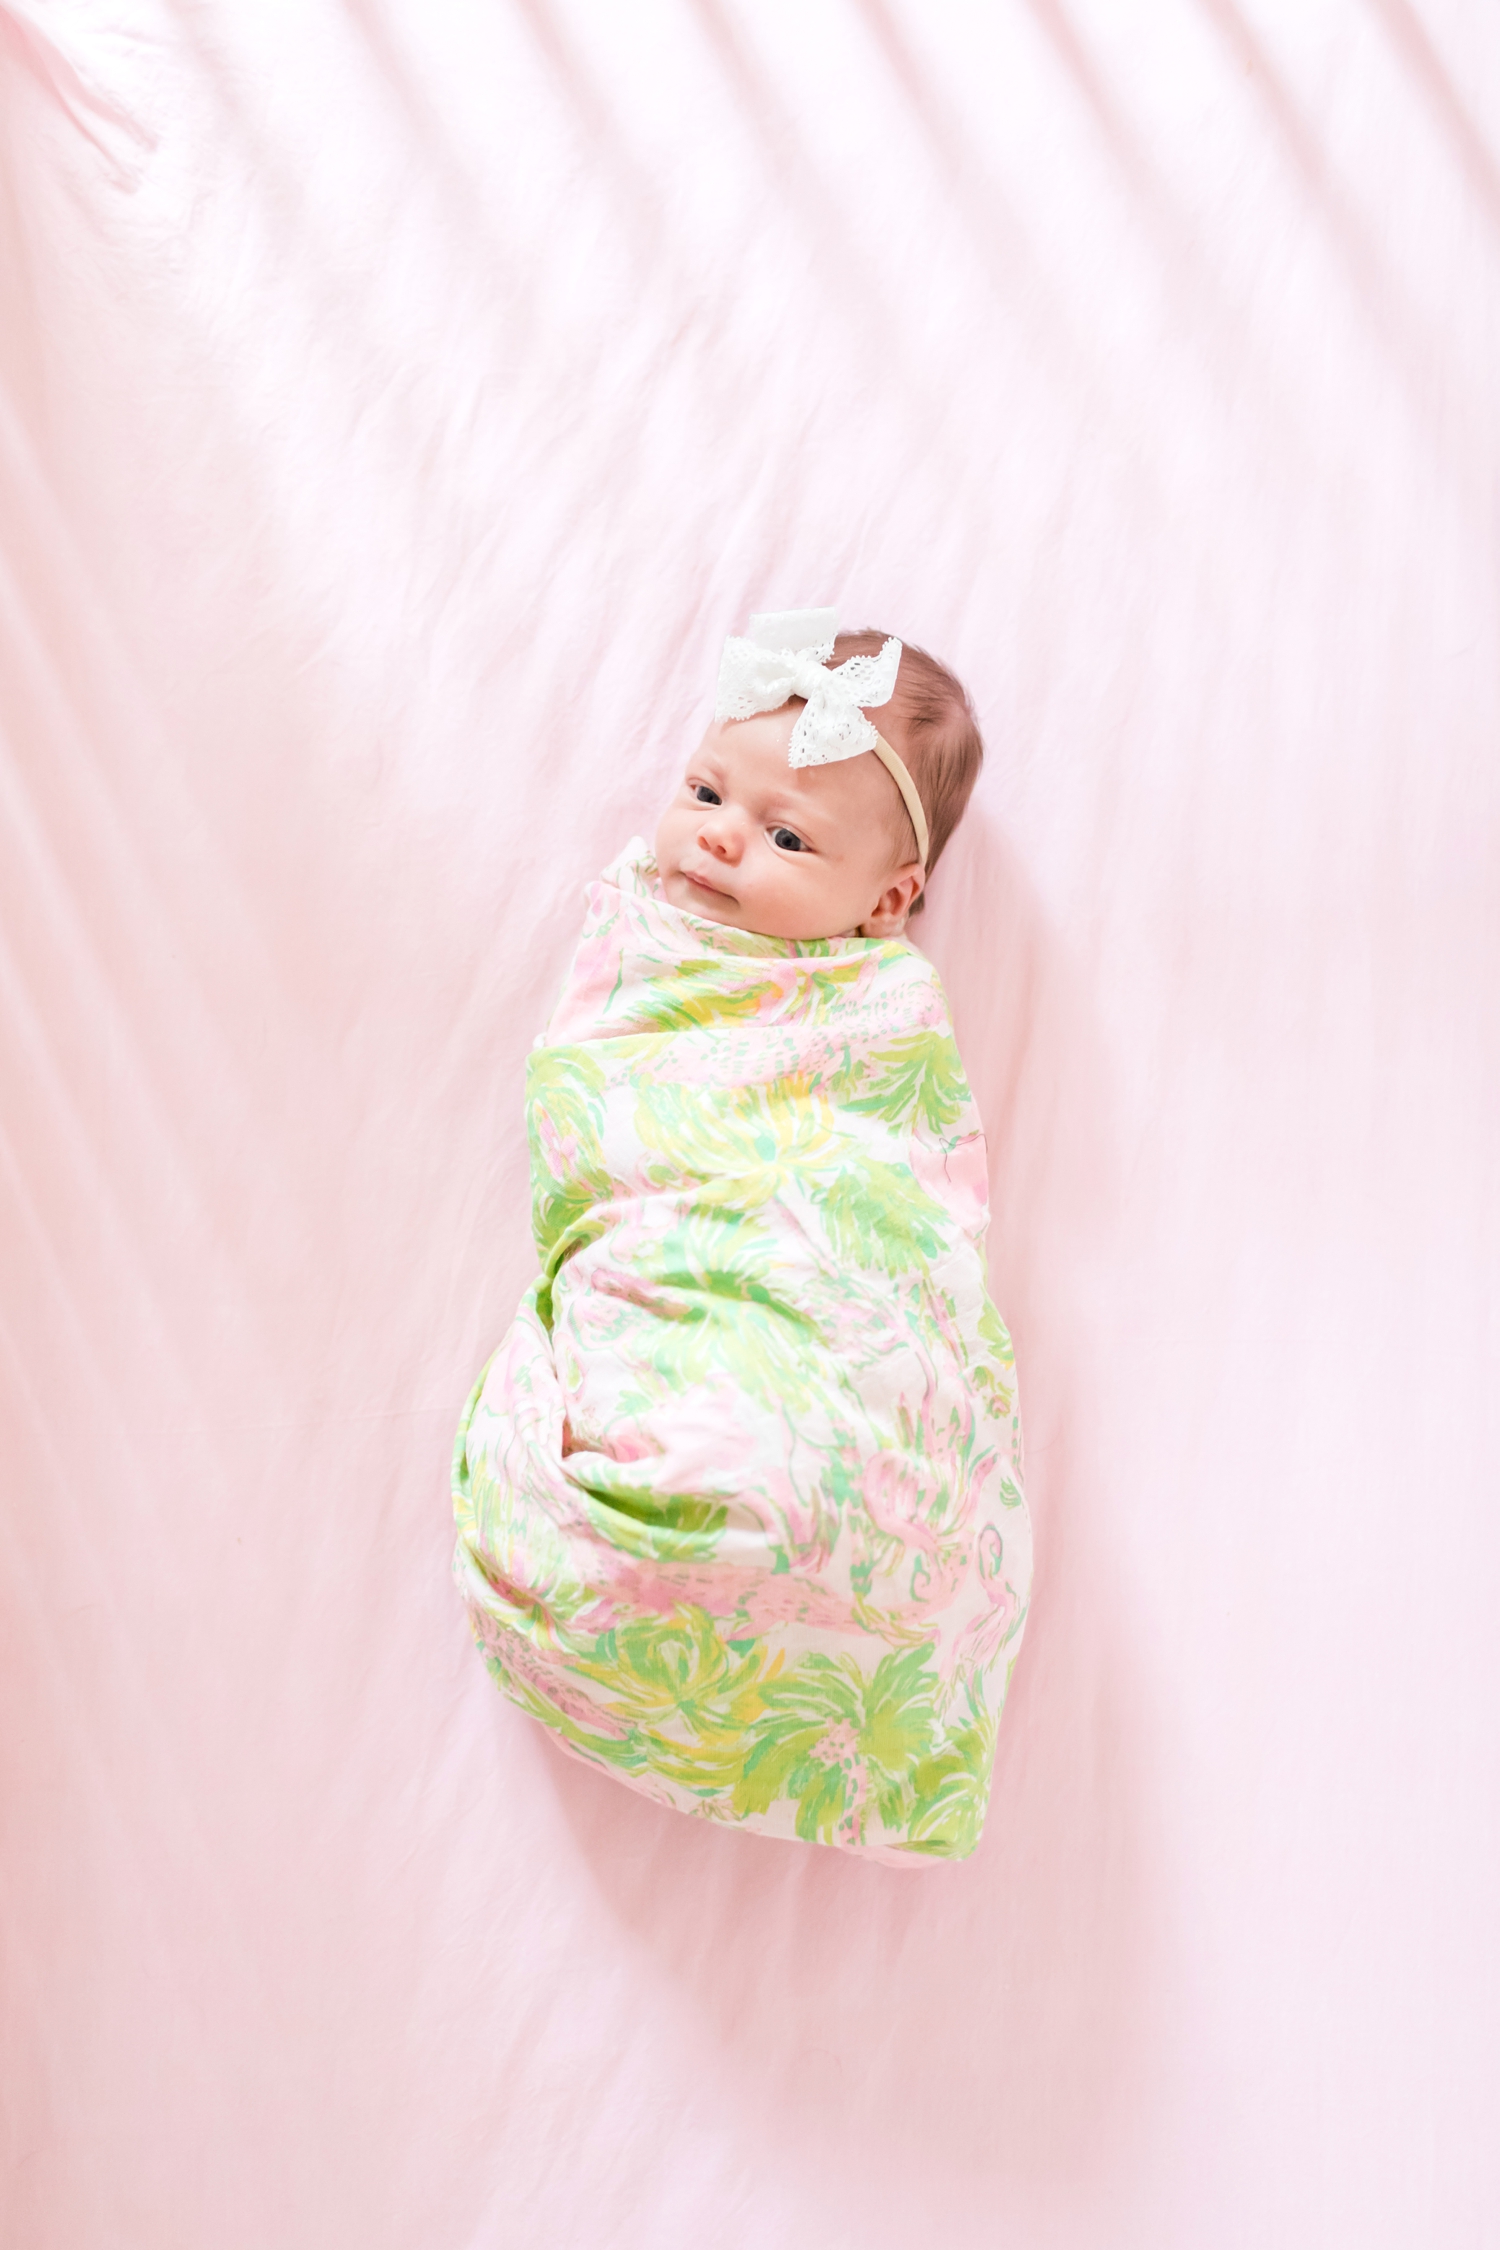 Winkler Newborn-165_Baltimore-Maryland-newborn-photographer-anna-grace-photography-photo.jpg